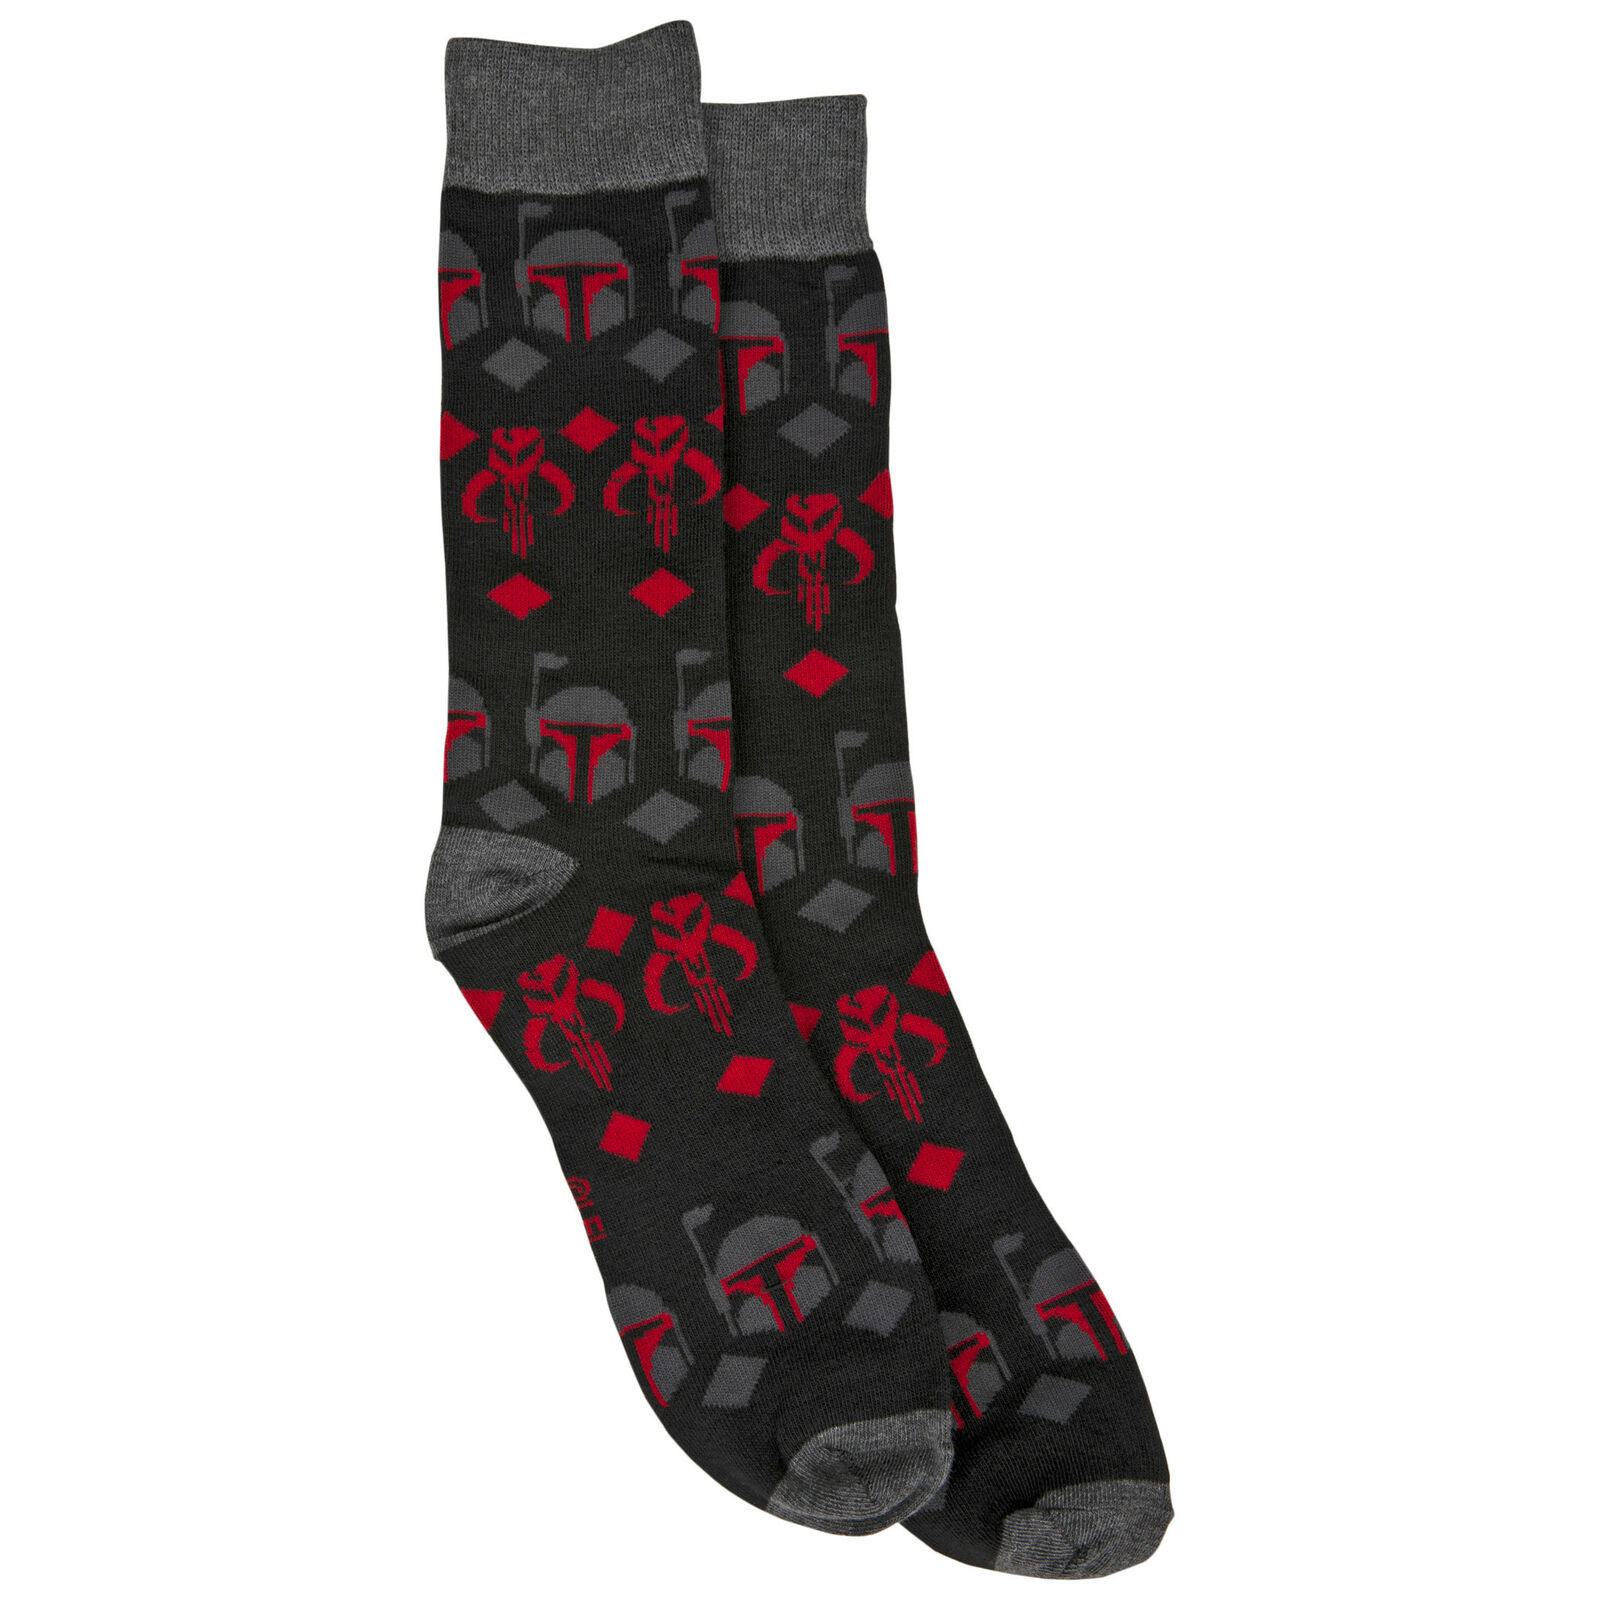 Star Wars Boba Fett Symbol and Mythosaur Crest Crew Socks Multi-Color - $14.98